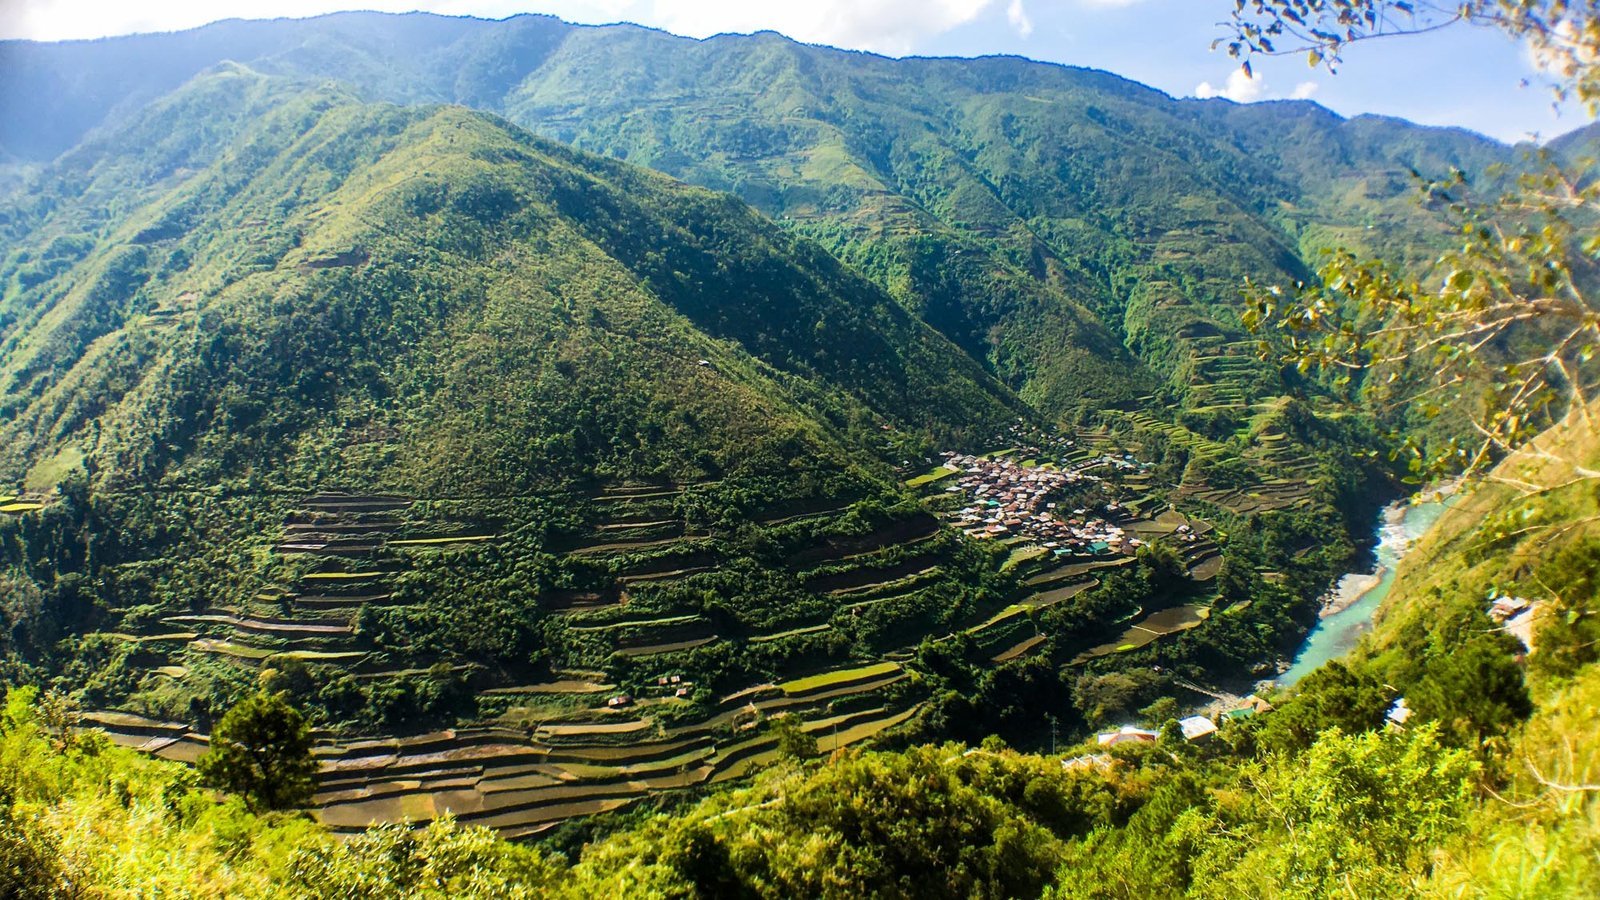 The view of Barangay Bugnay, Tinglayan, Kalinga while riding a habal-habal.